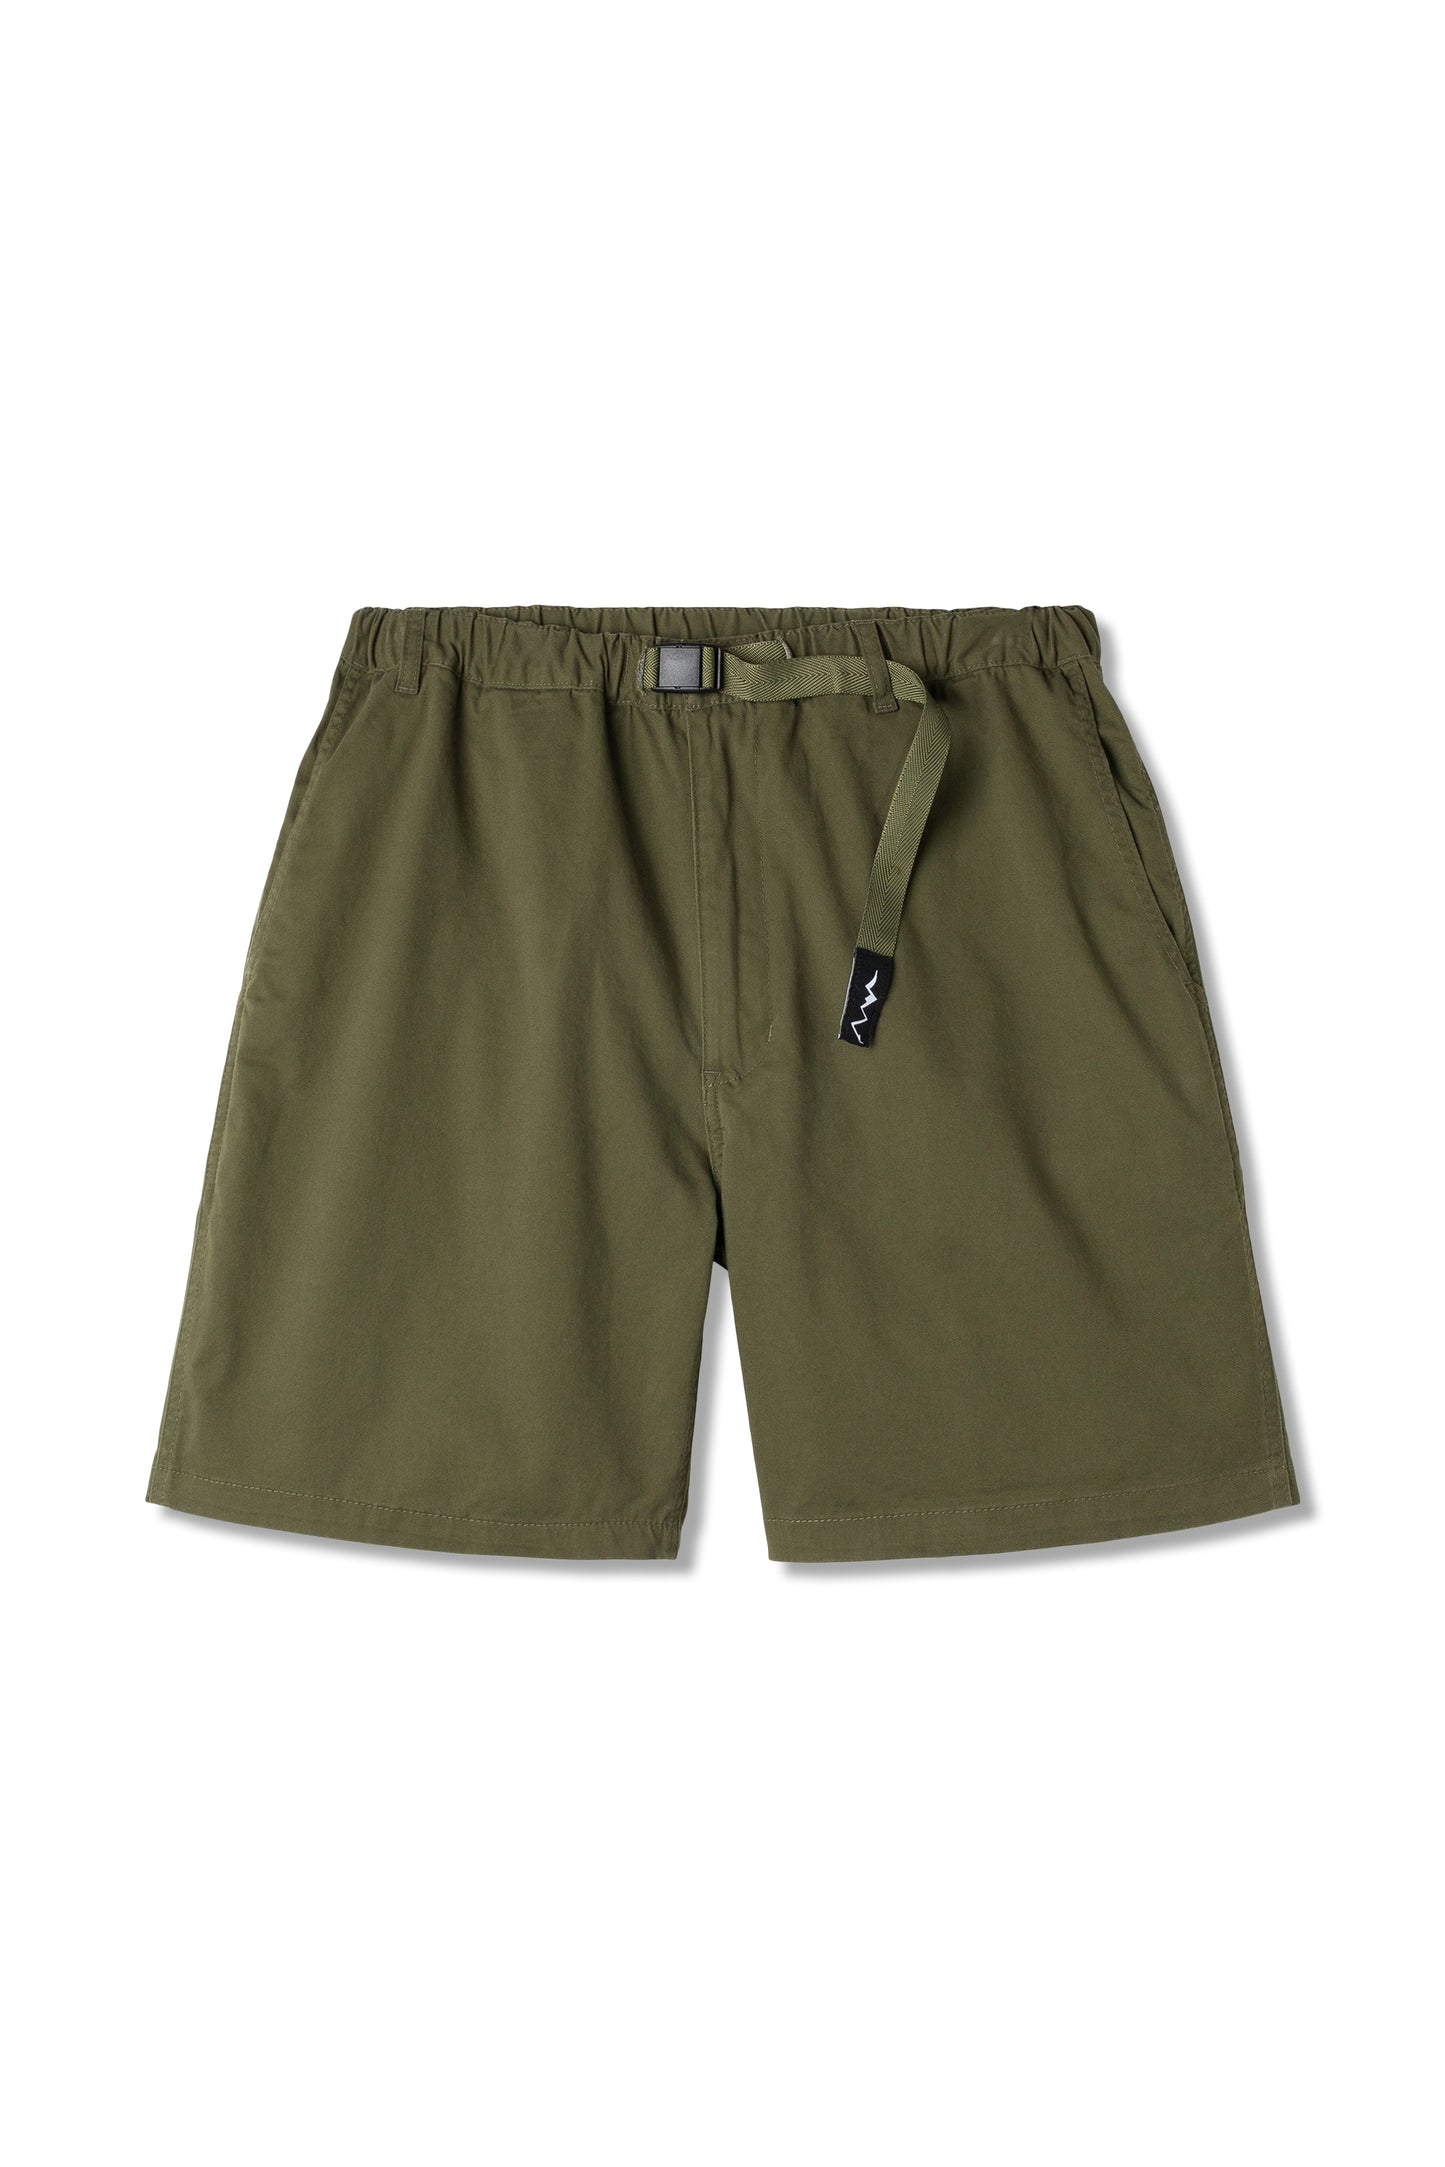 Flex Climber Wide Shorts (Olive)